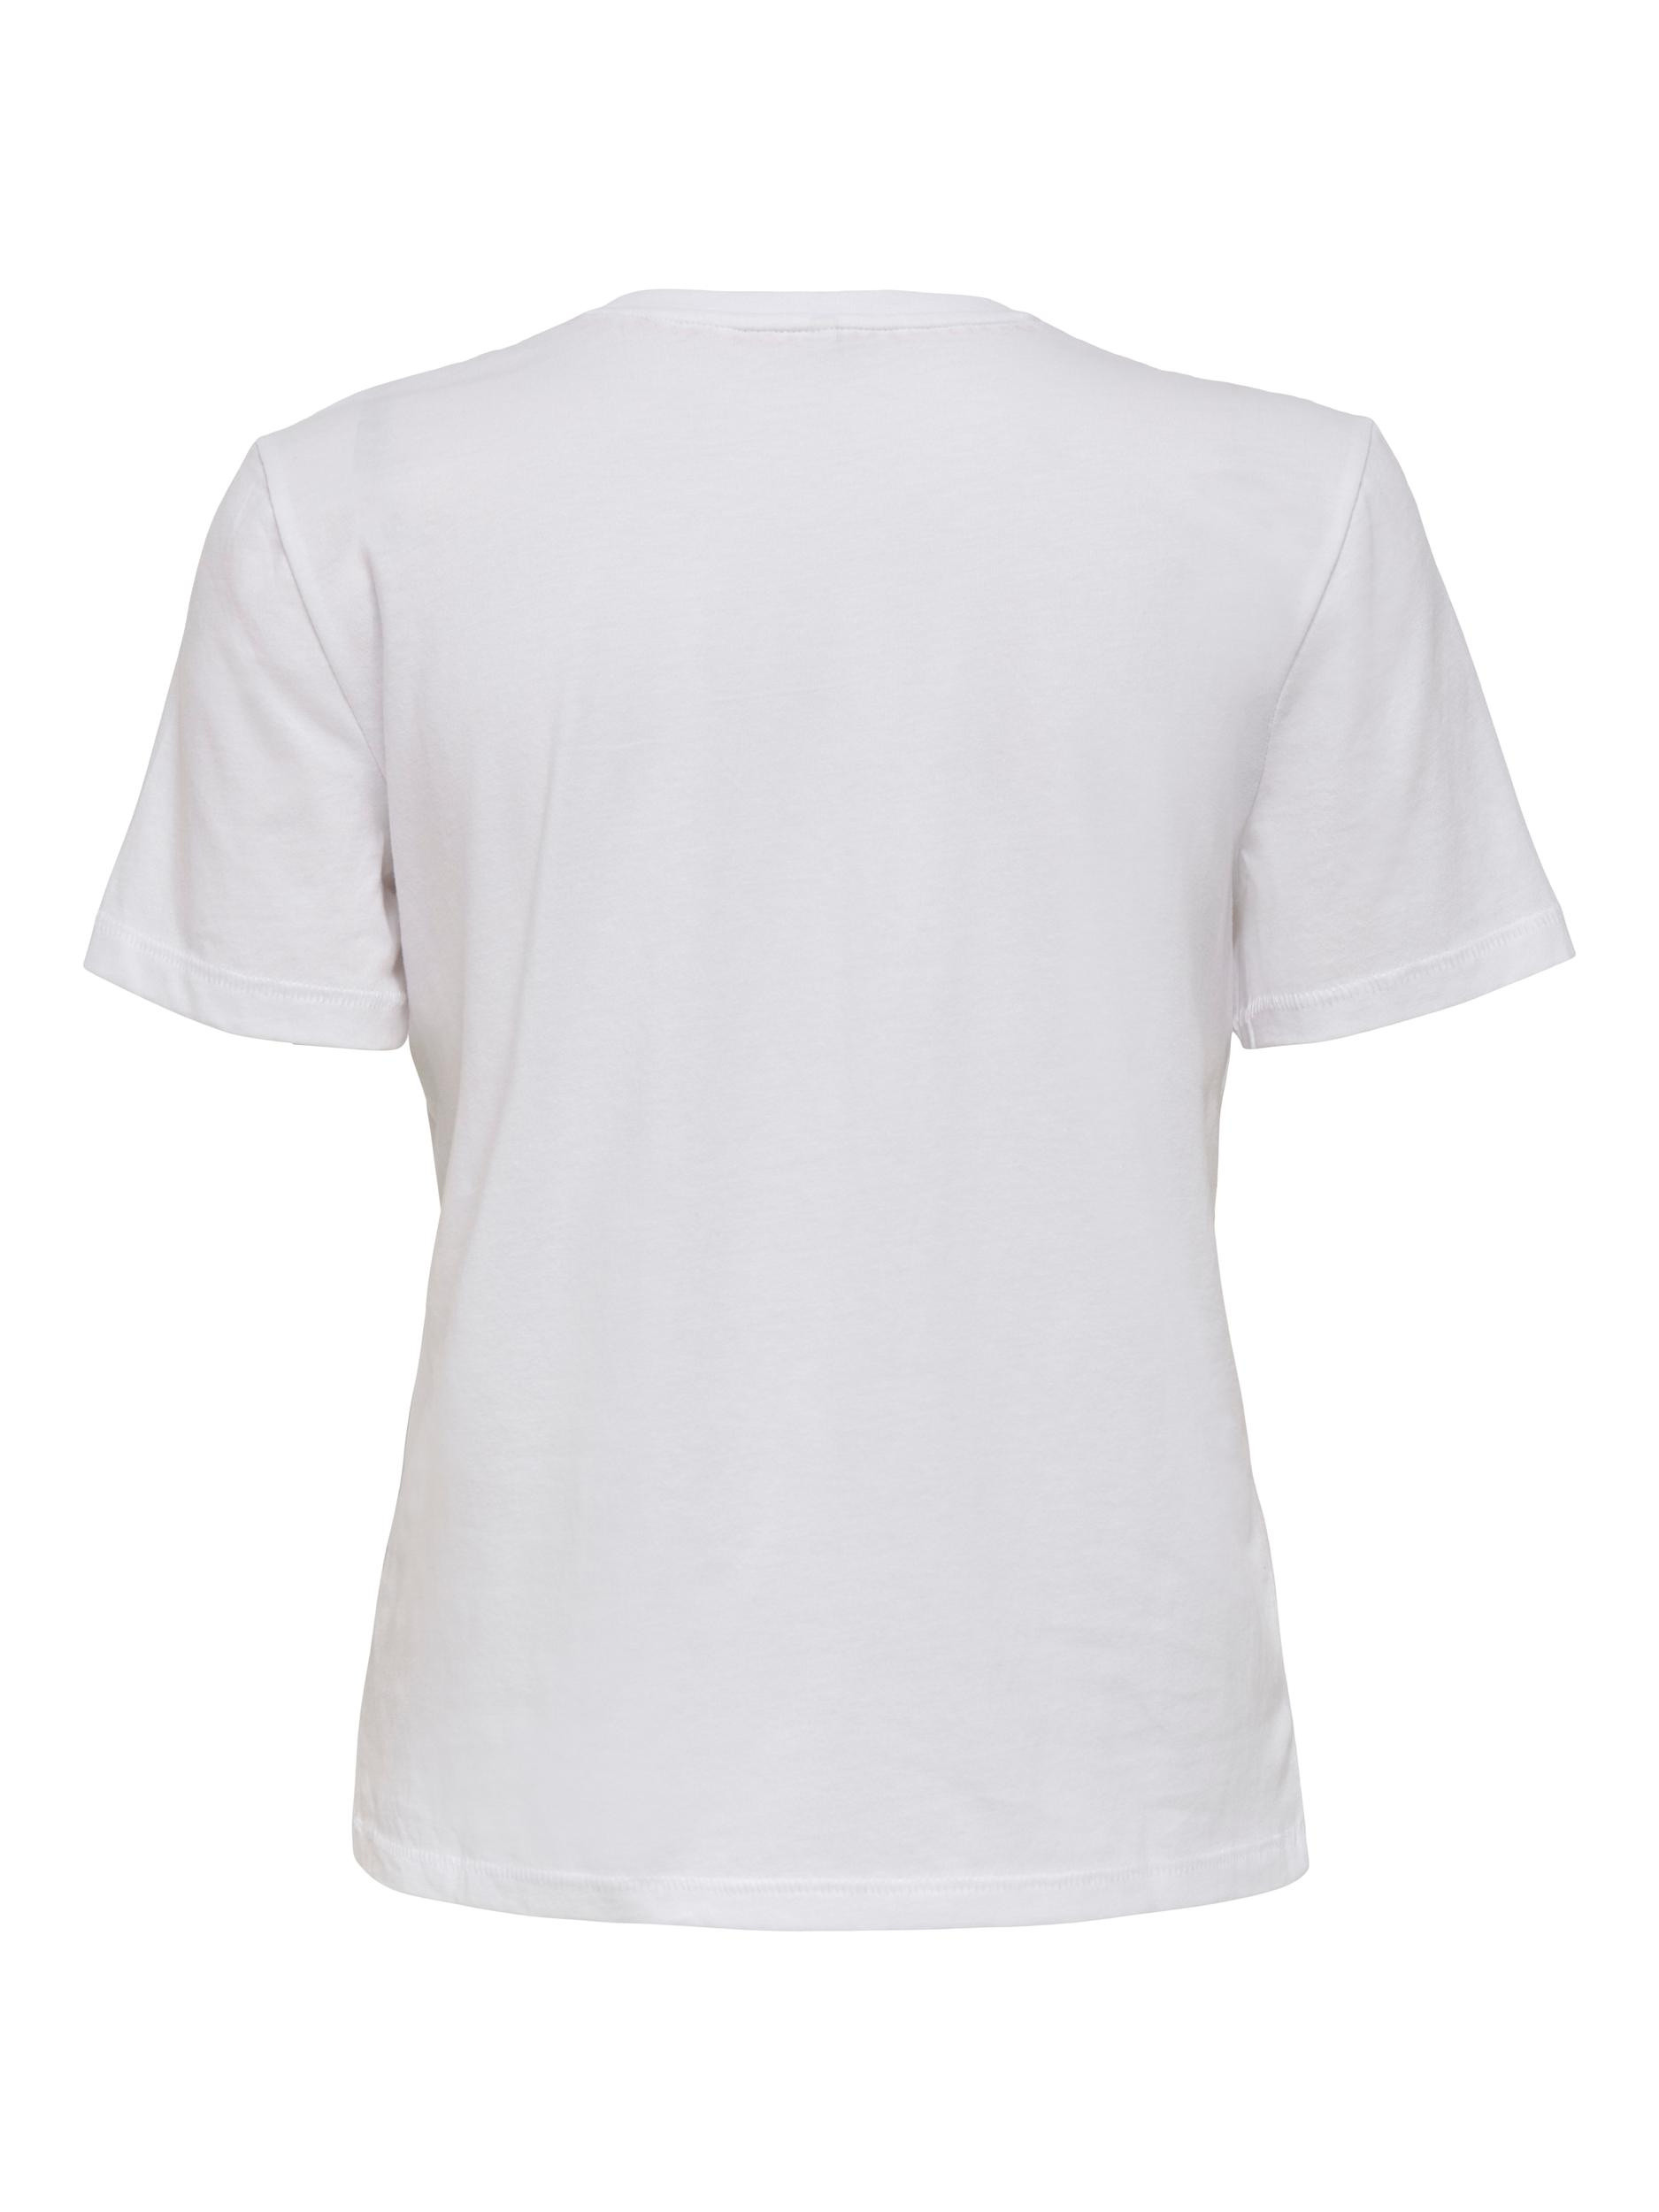 T-shirt con stampa, Bianco, large image number 1